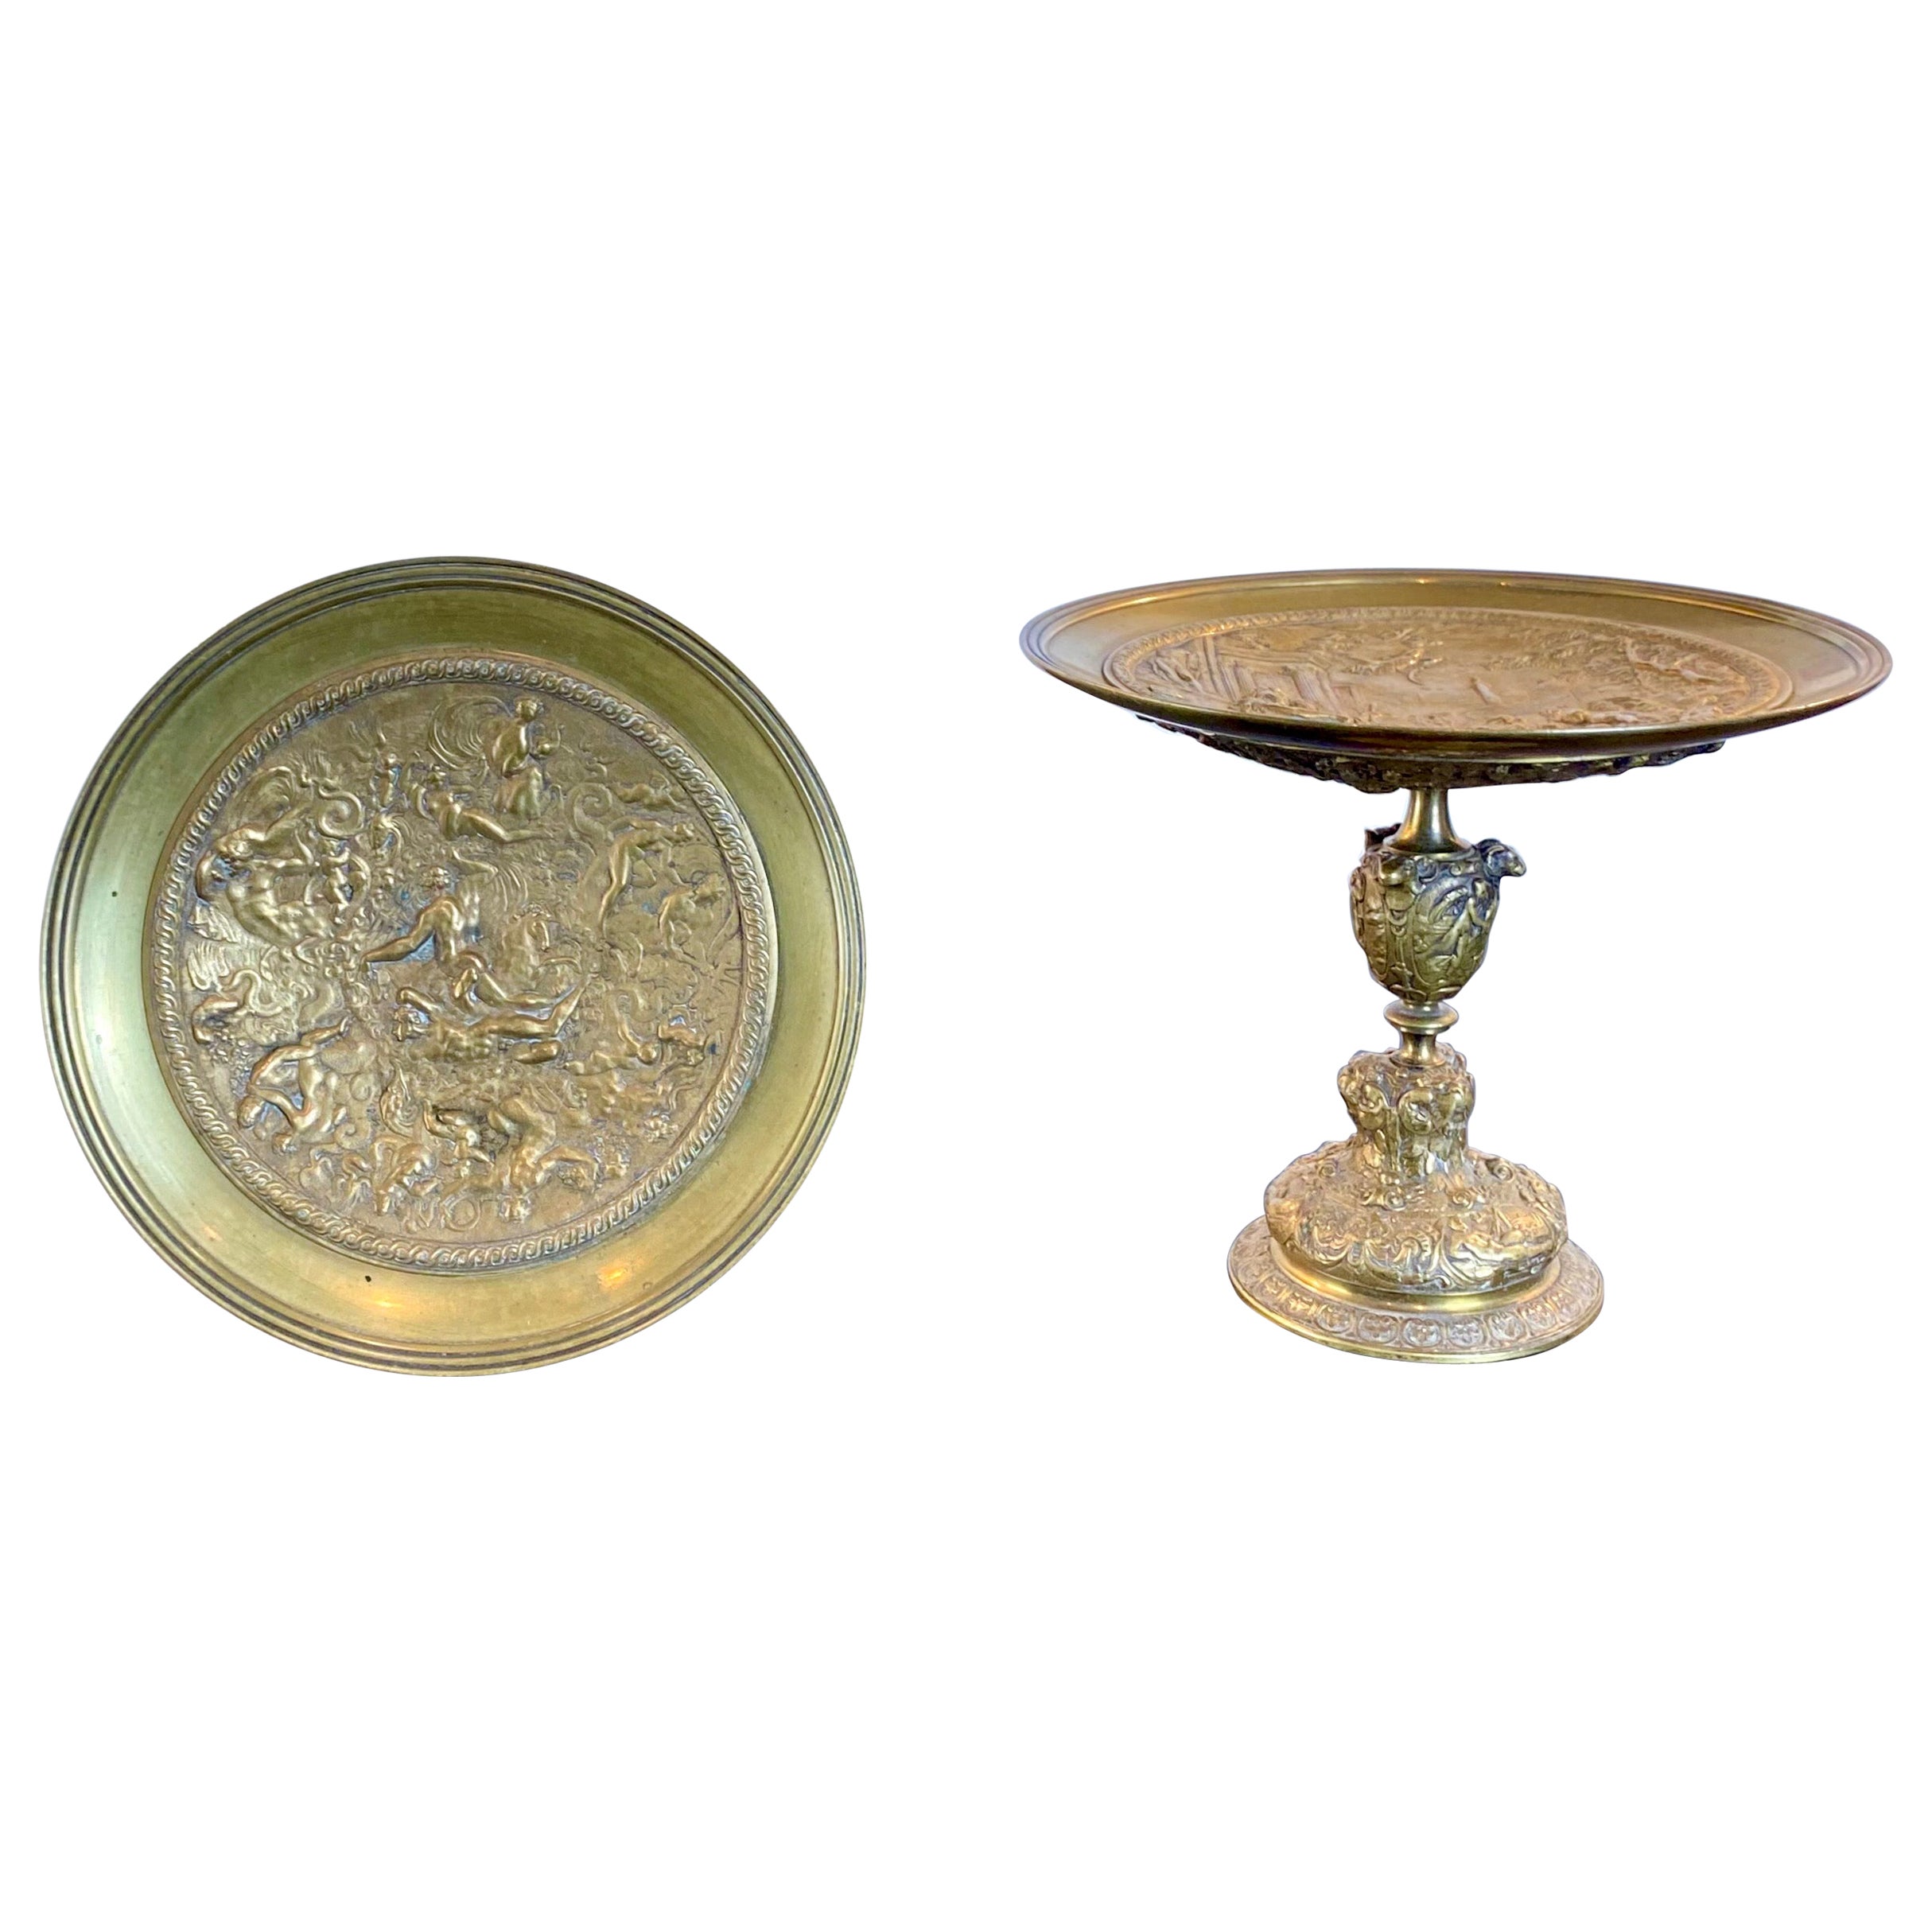 Tazza Neo Renaissance Pair of Cups Gilt Bronze Decor Deities of Antiquity 19thC. For Sale